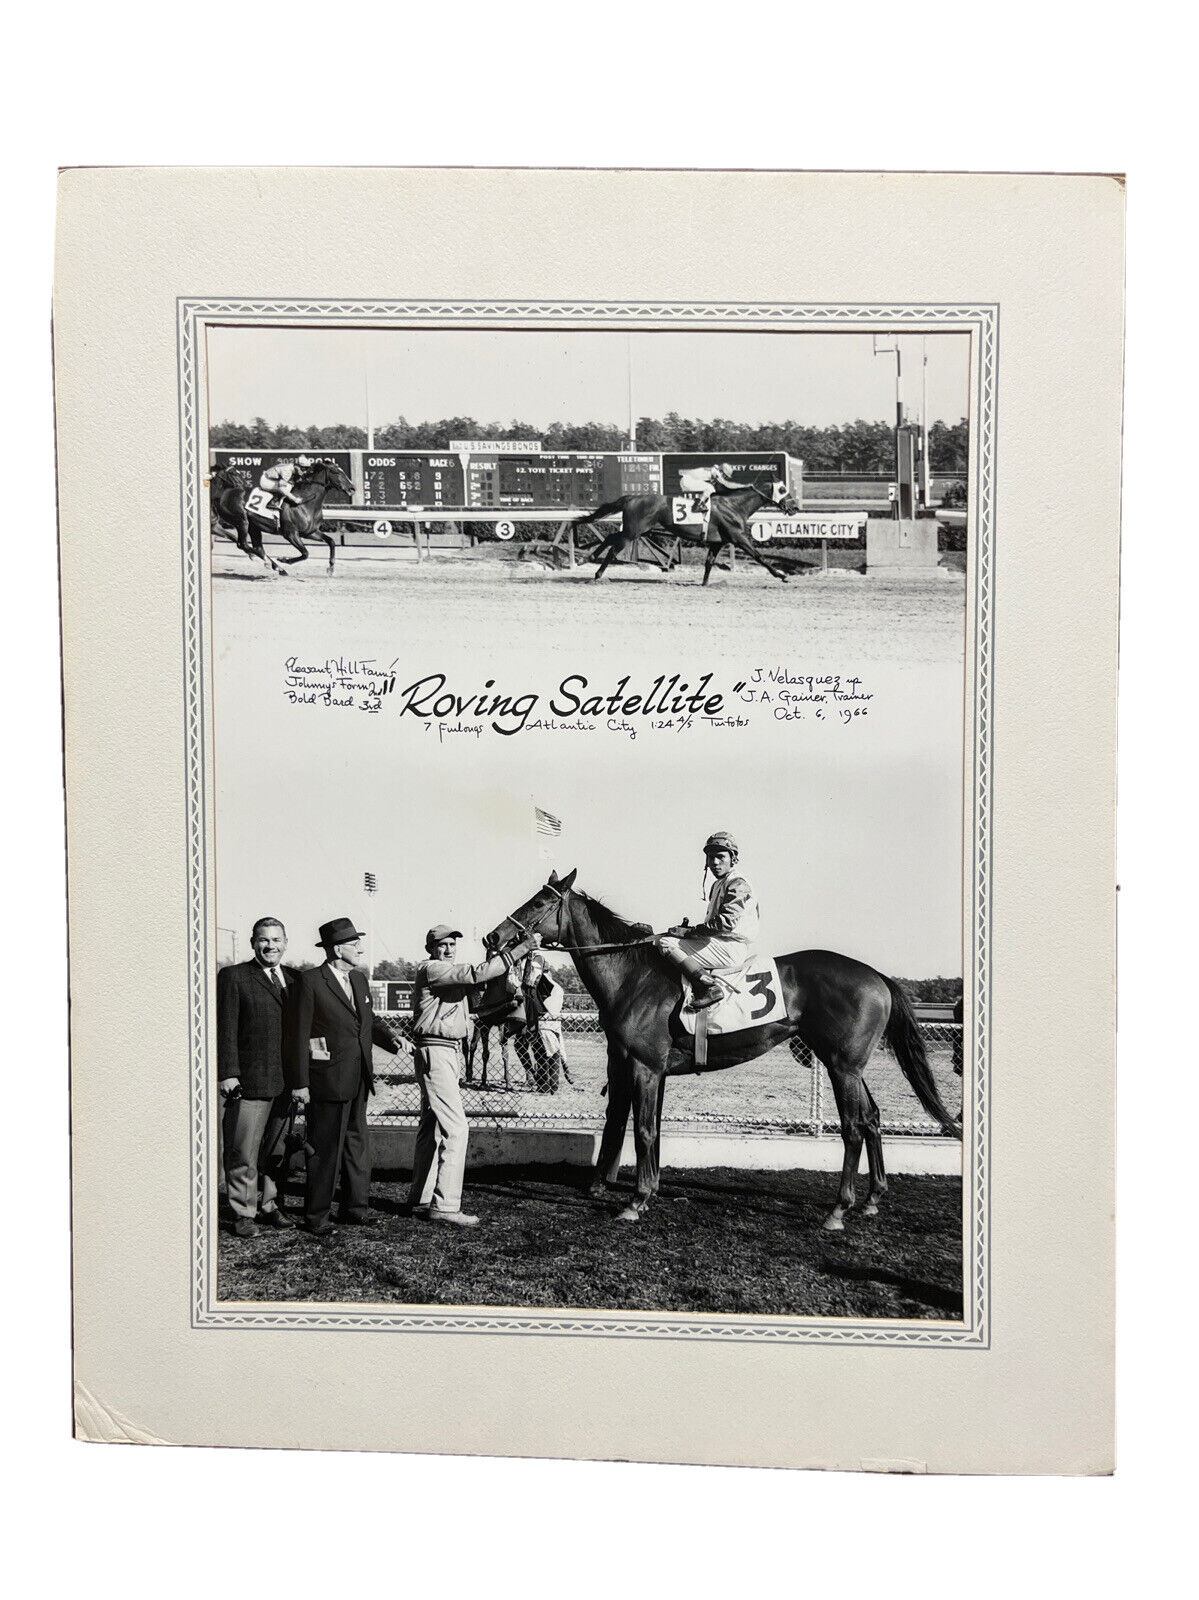 Rare Turfotos Horse Racing Oct 1966 Roving Satellite 11”x14” Mounted Photograph